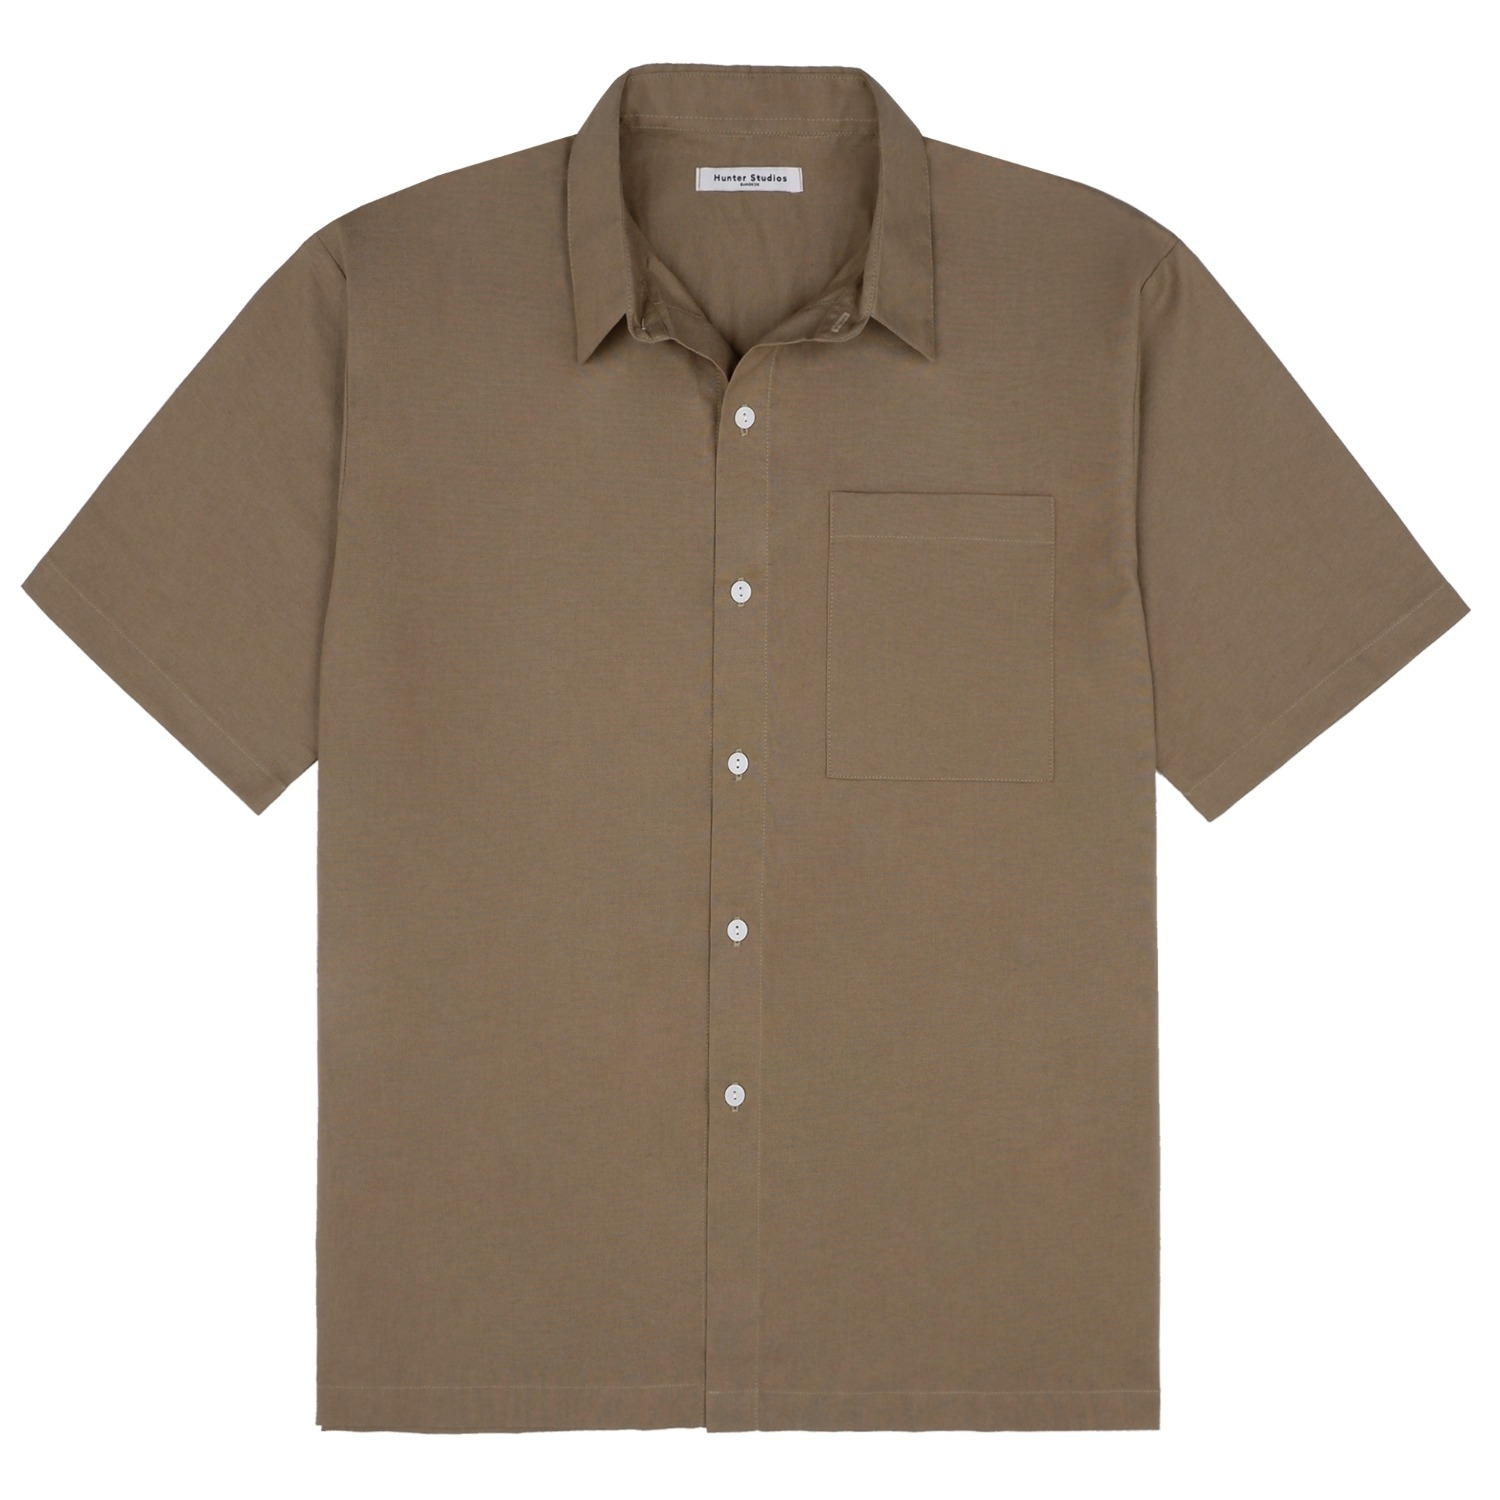 Fainly Shirt (Brown)